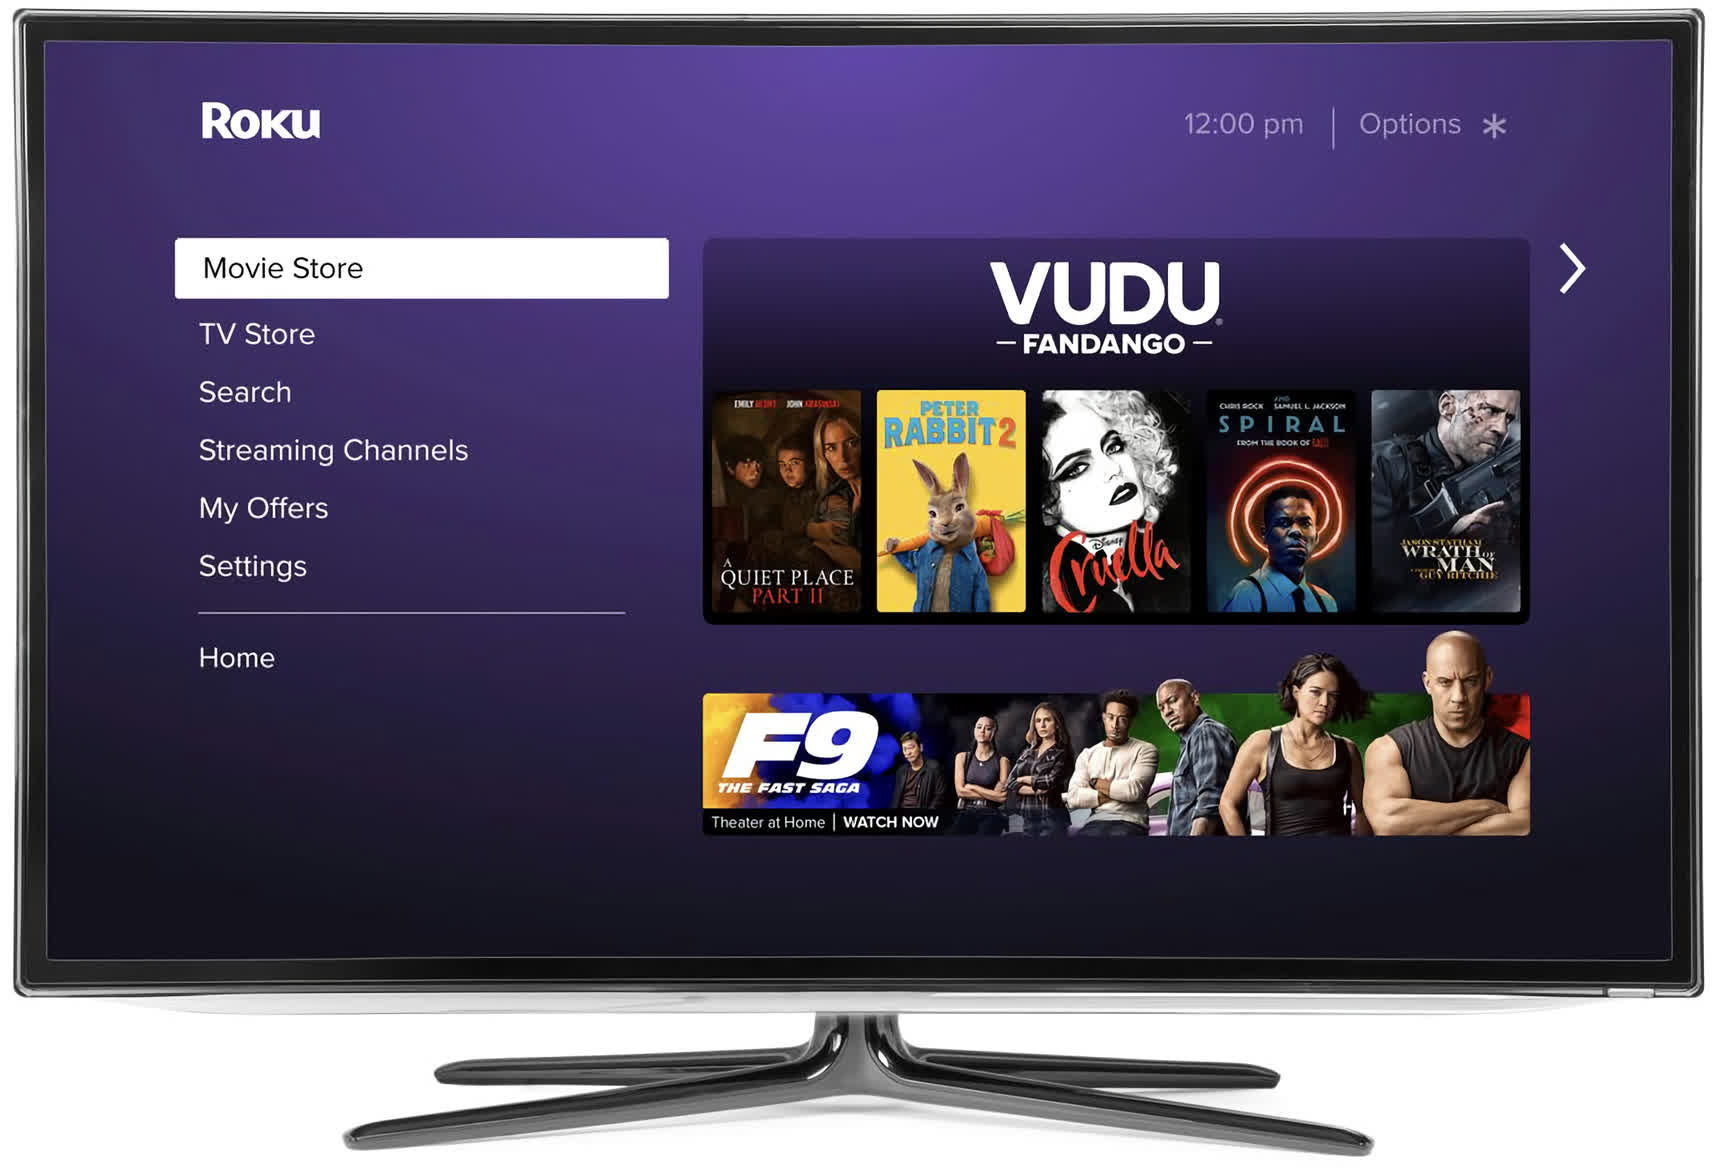 Fandango rolls its streaming service into Vudu